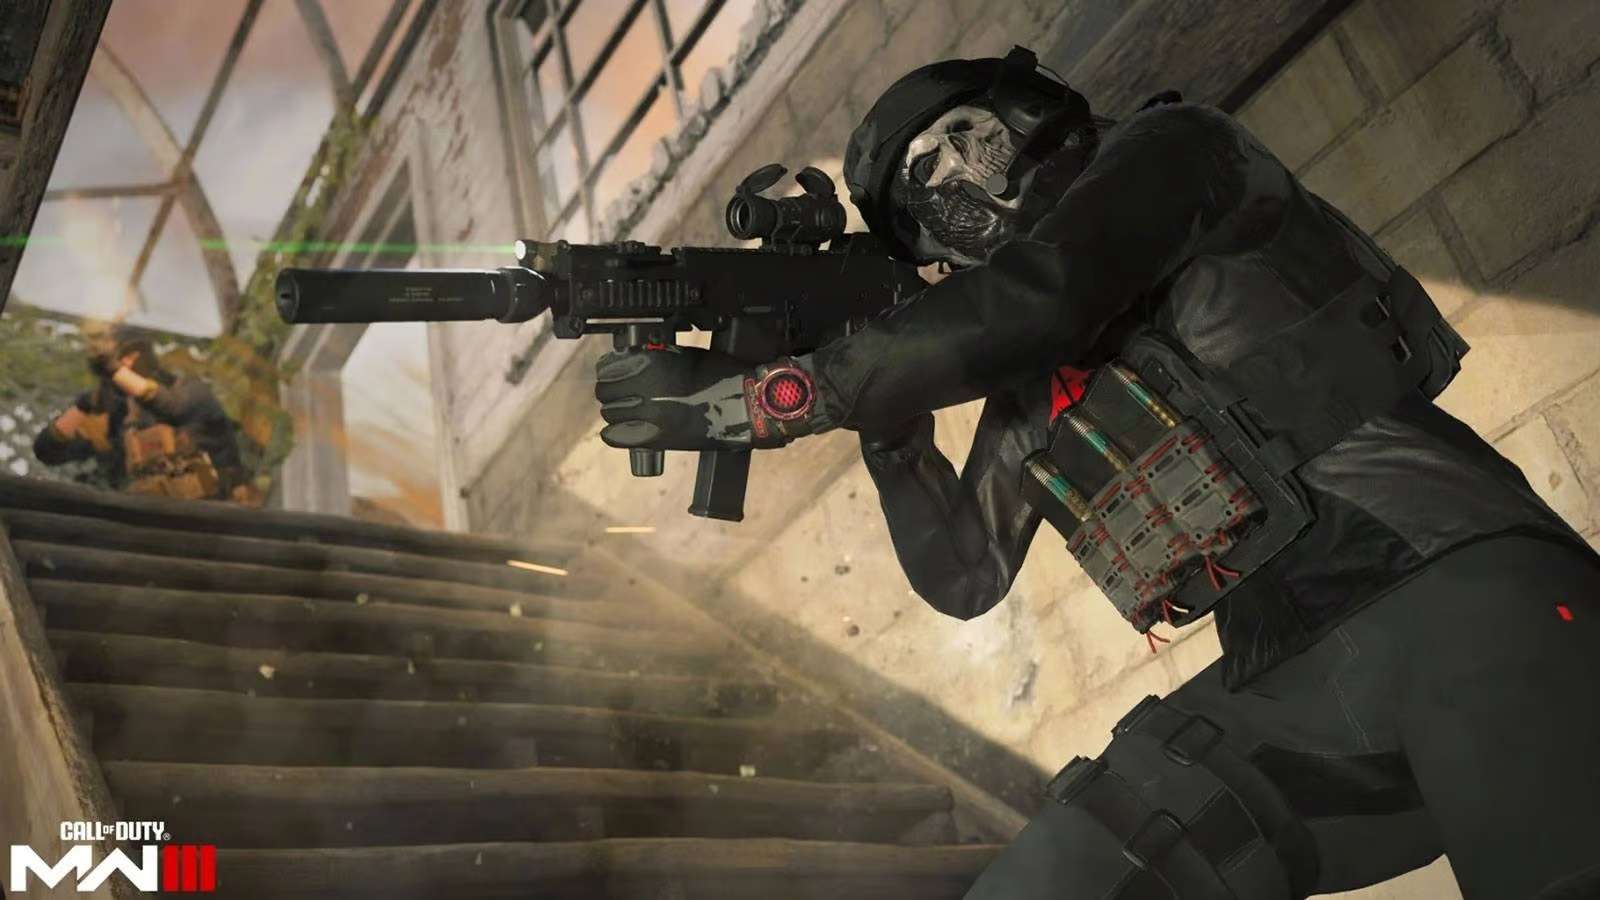 Joueur avec une arme dans Modern Warfare 3